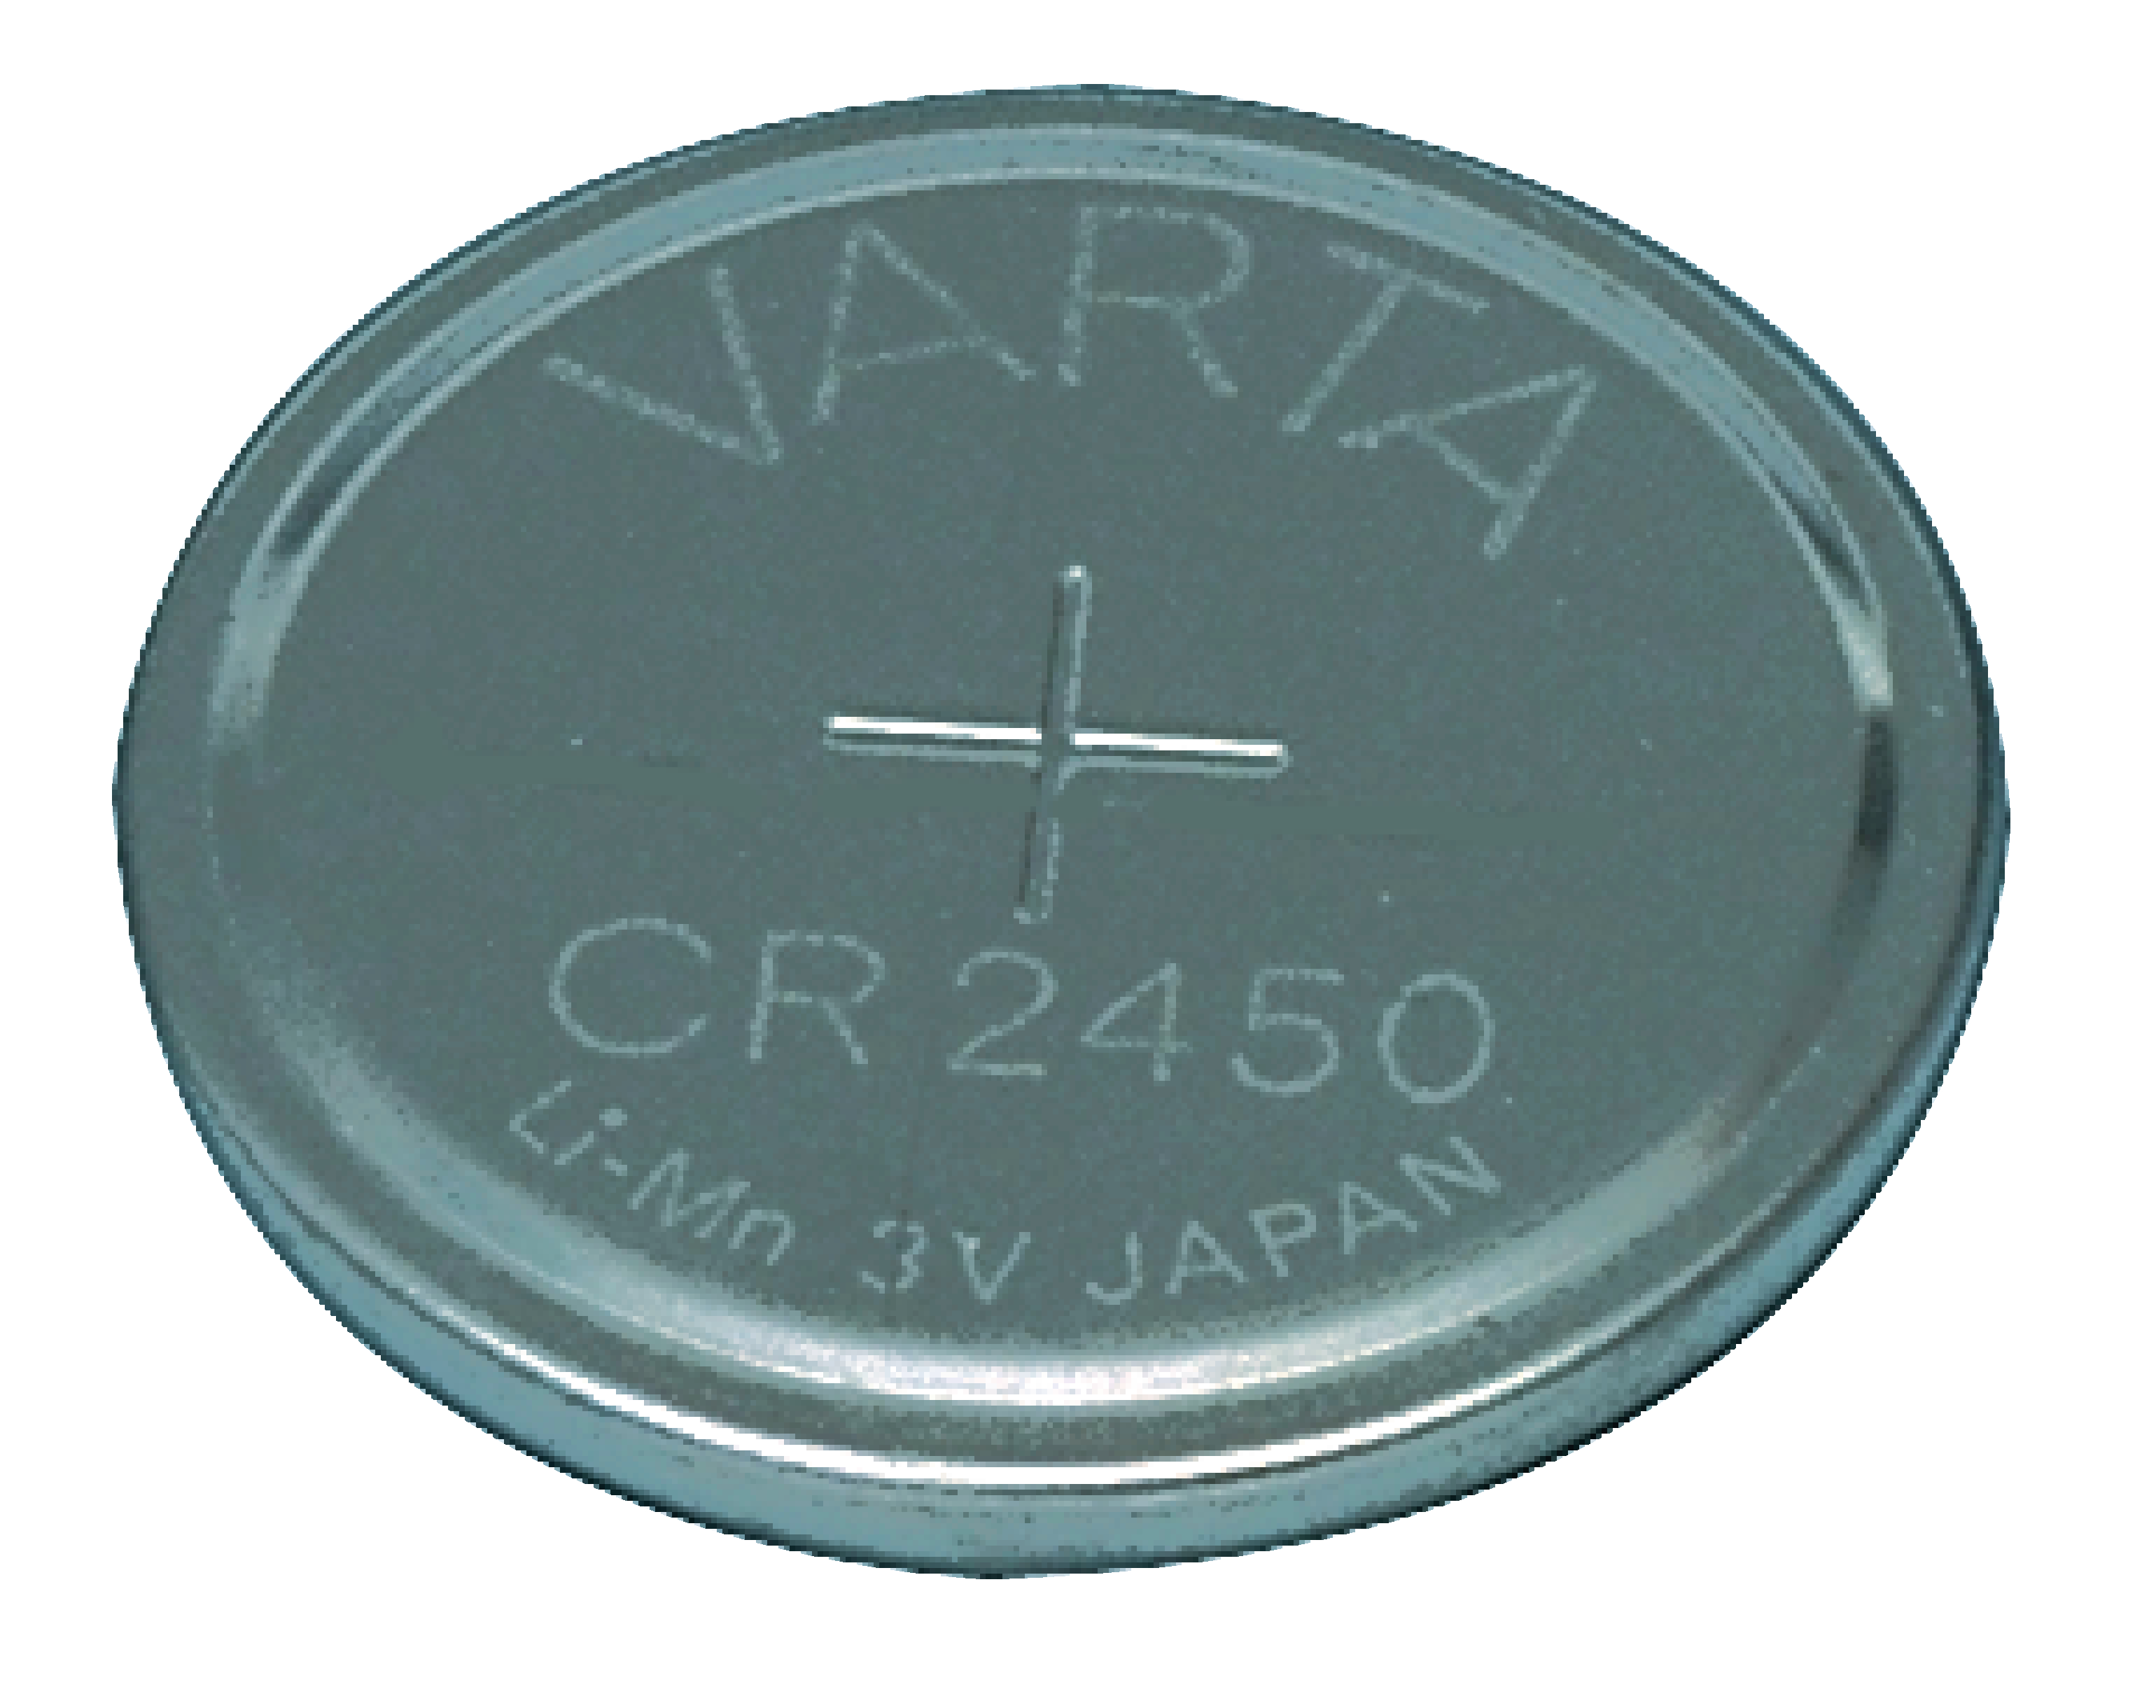 Varta lithium battery CR2450 - Batteries 